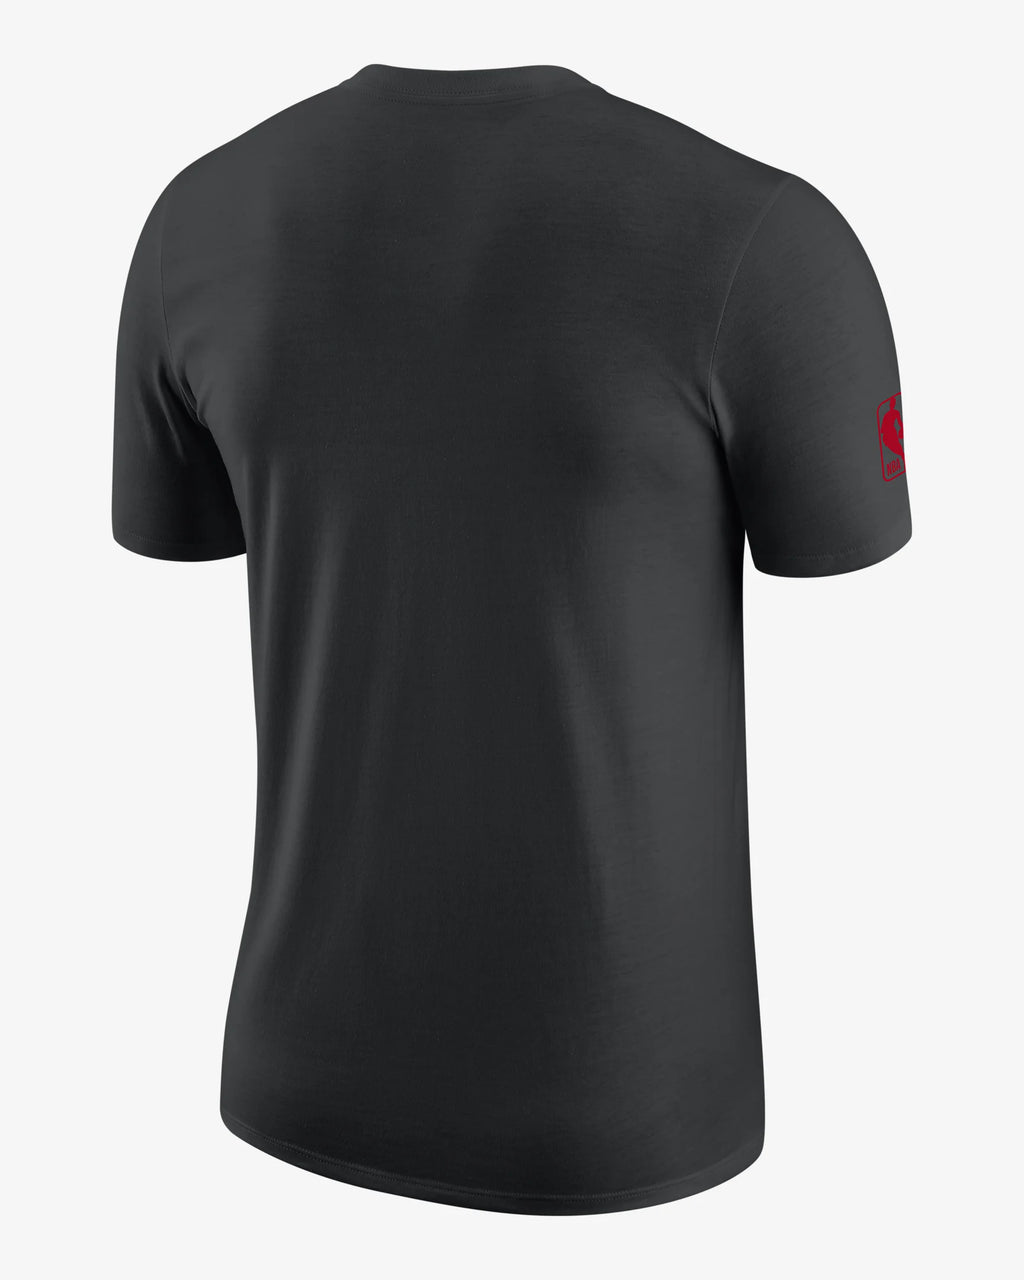 Miami Heat City Edition Men's Nike NBA T-Shirt 'Black'